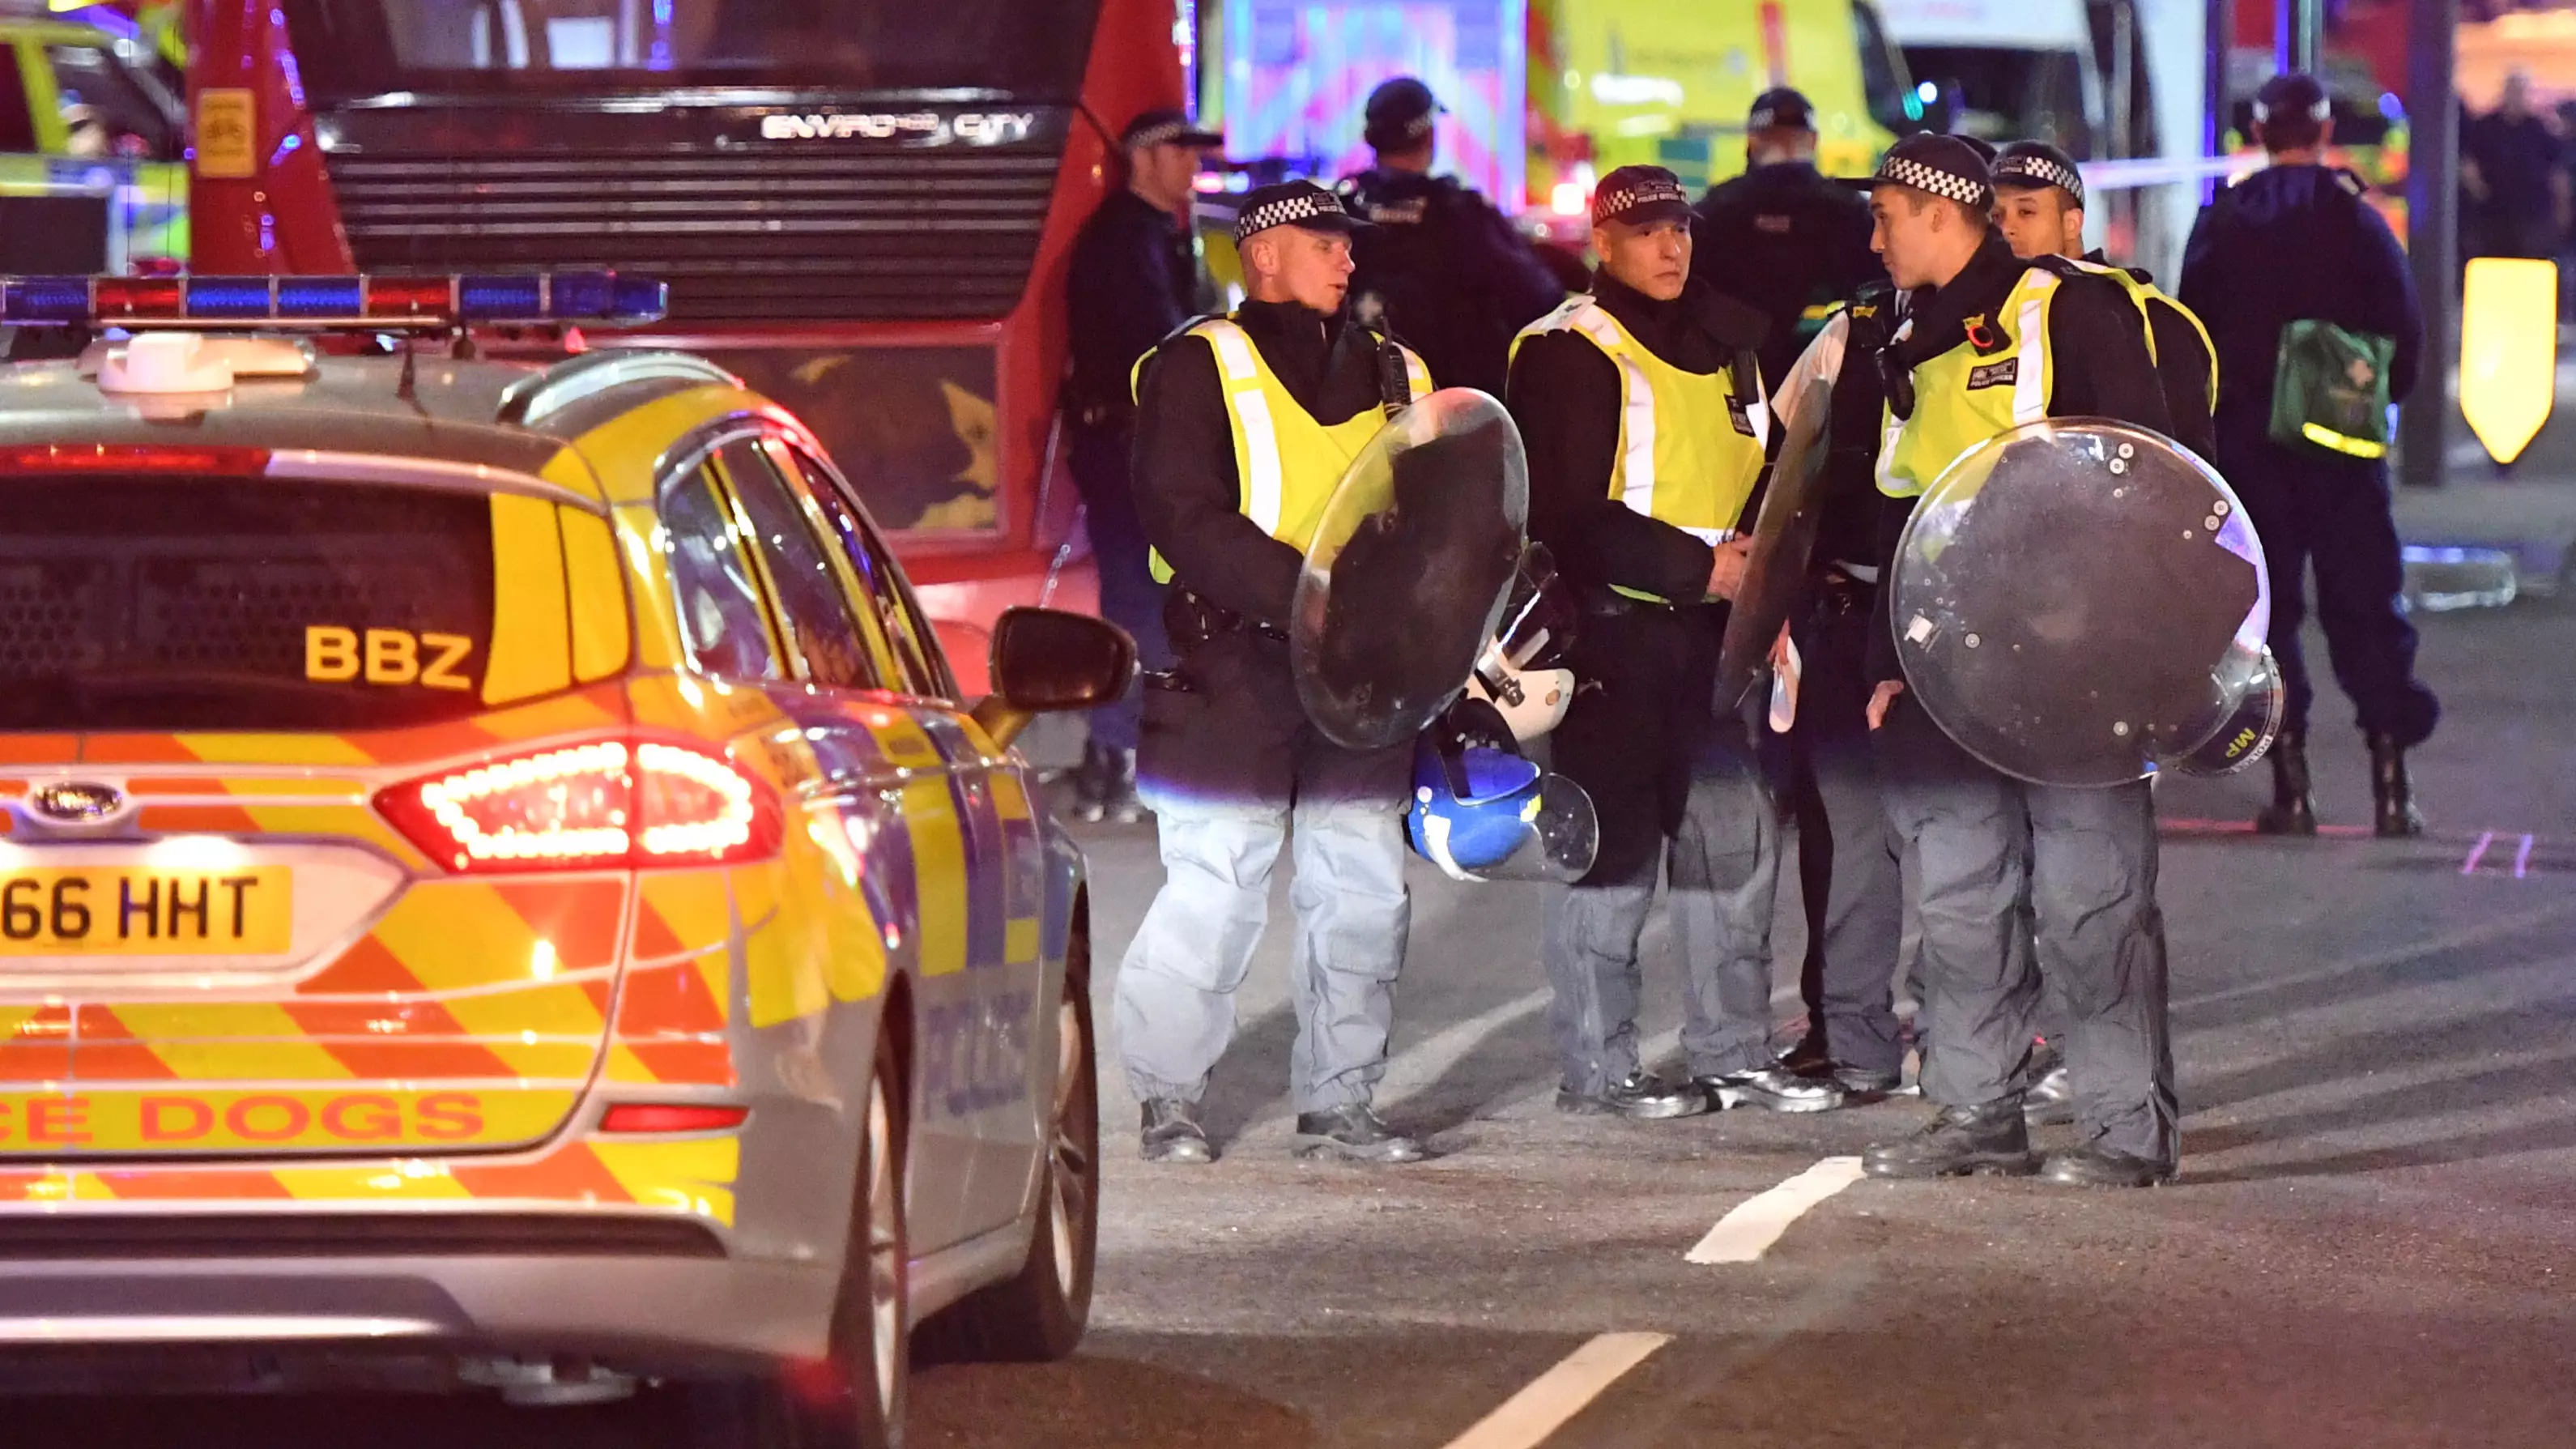 Heroic Off-Duty Cop Injured In London Terror Attack 